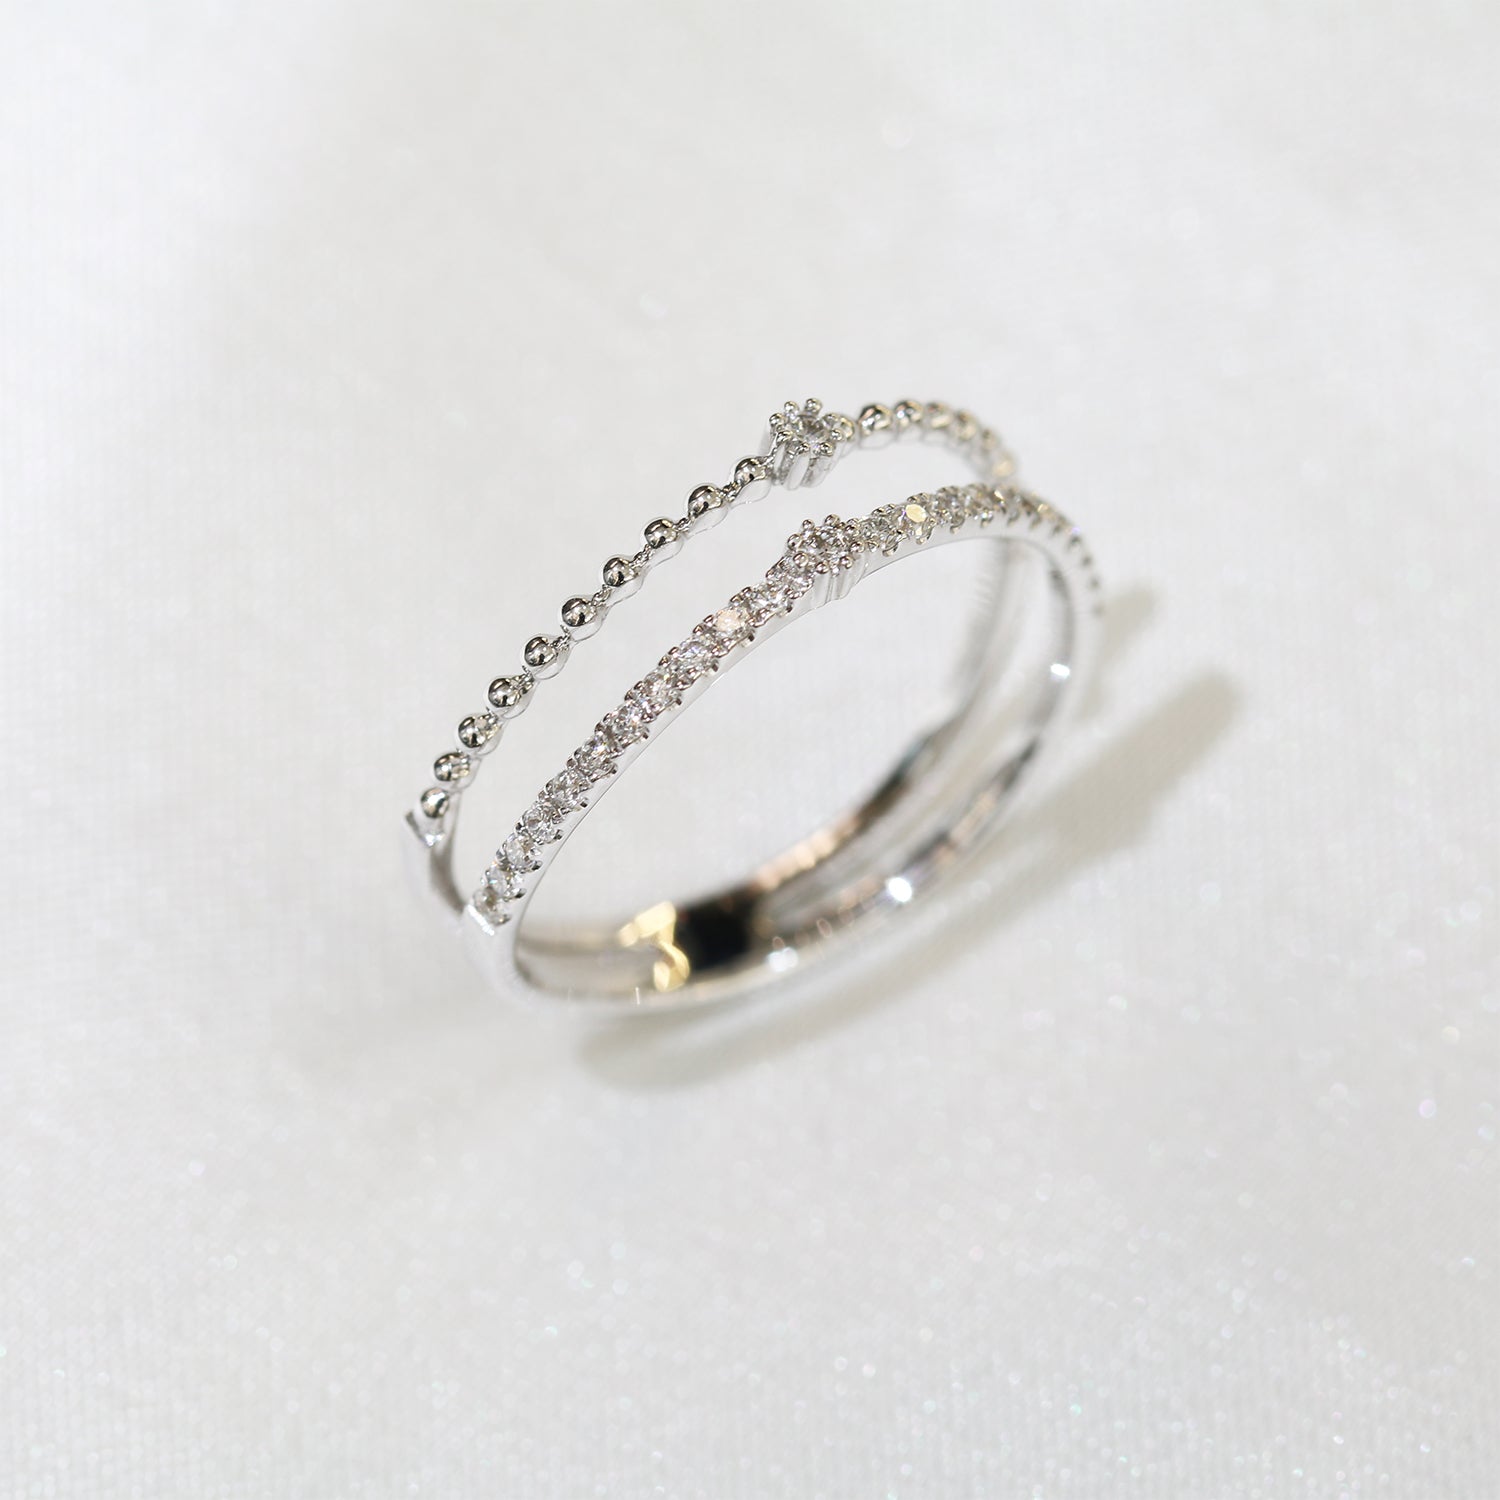 18k白金兩行鑽石排戒側面 White Gold 2-Row Diamond Ring on side view